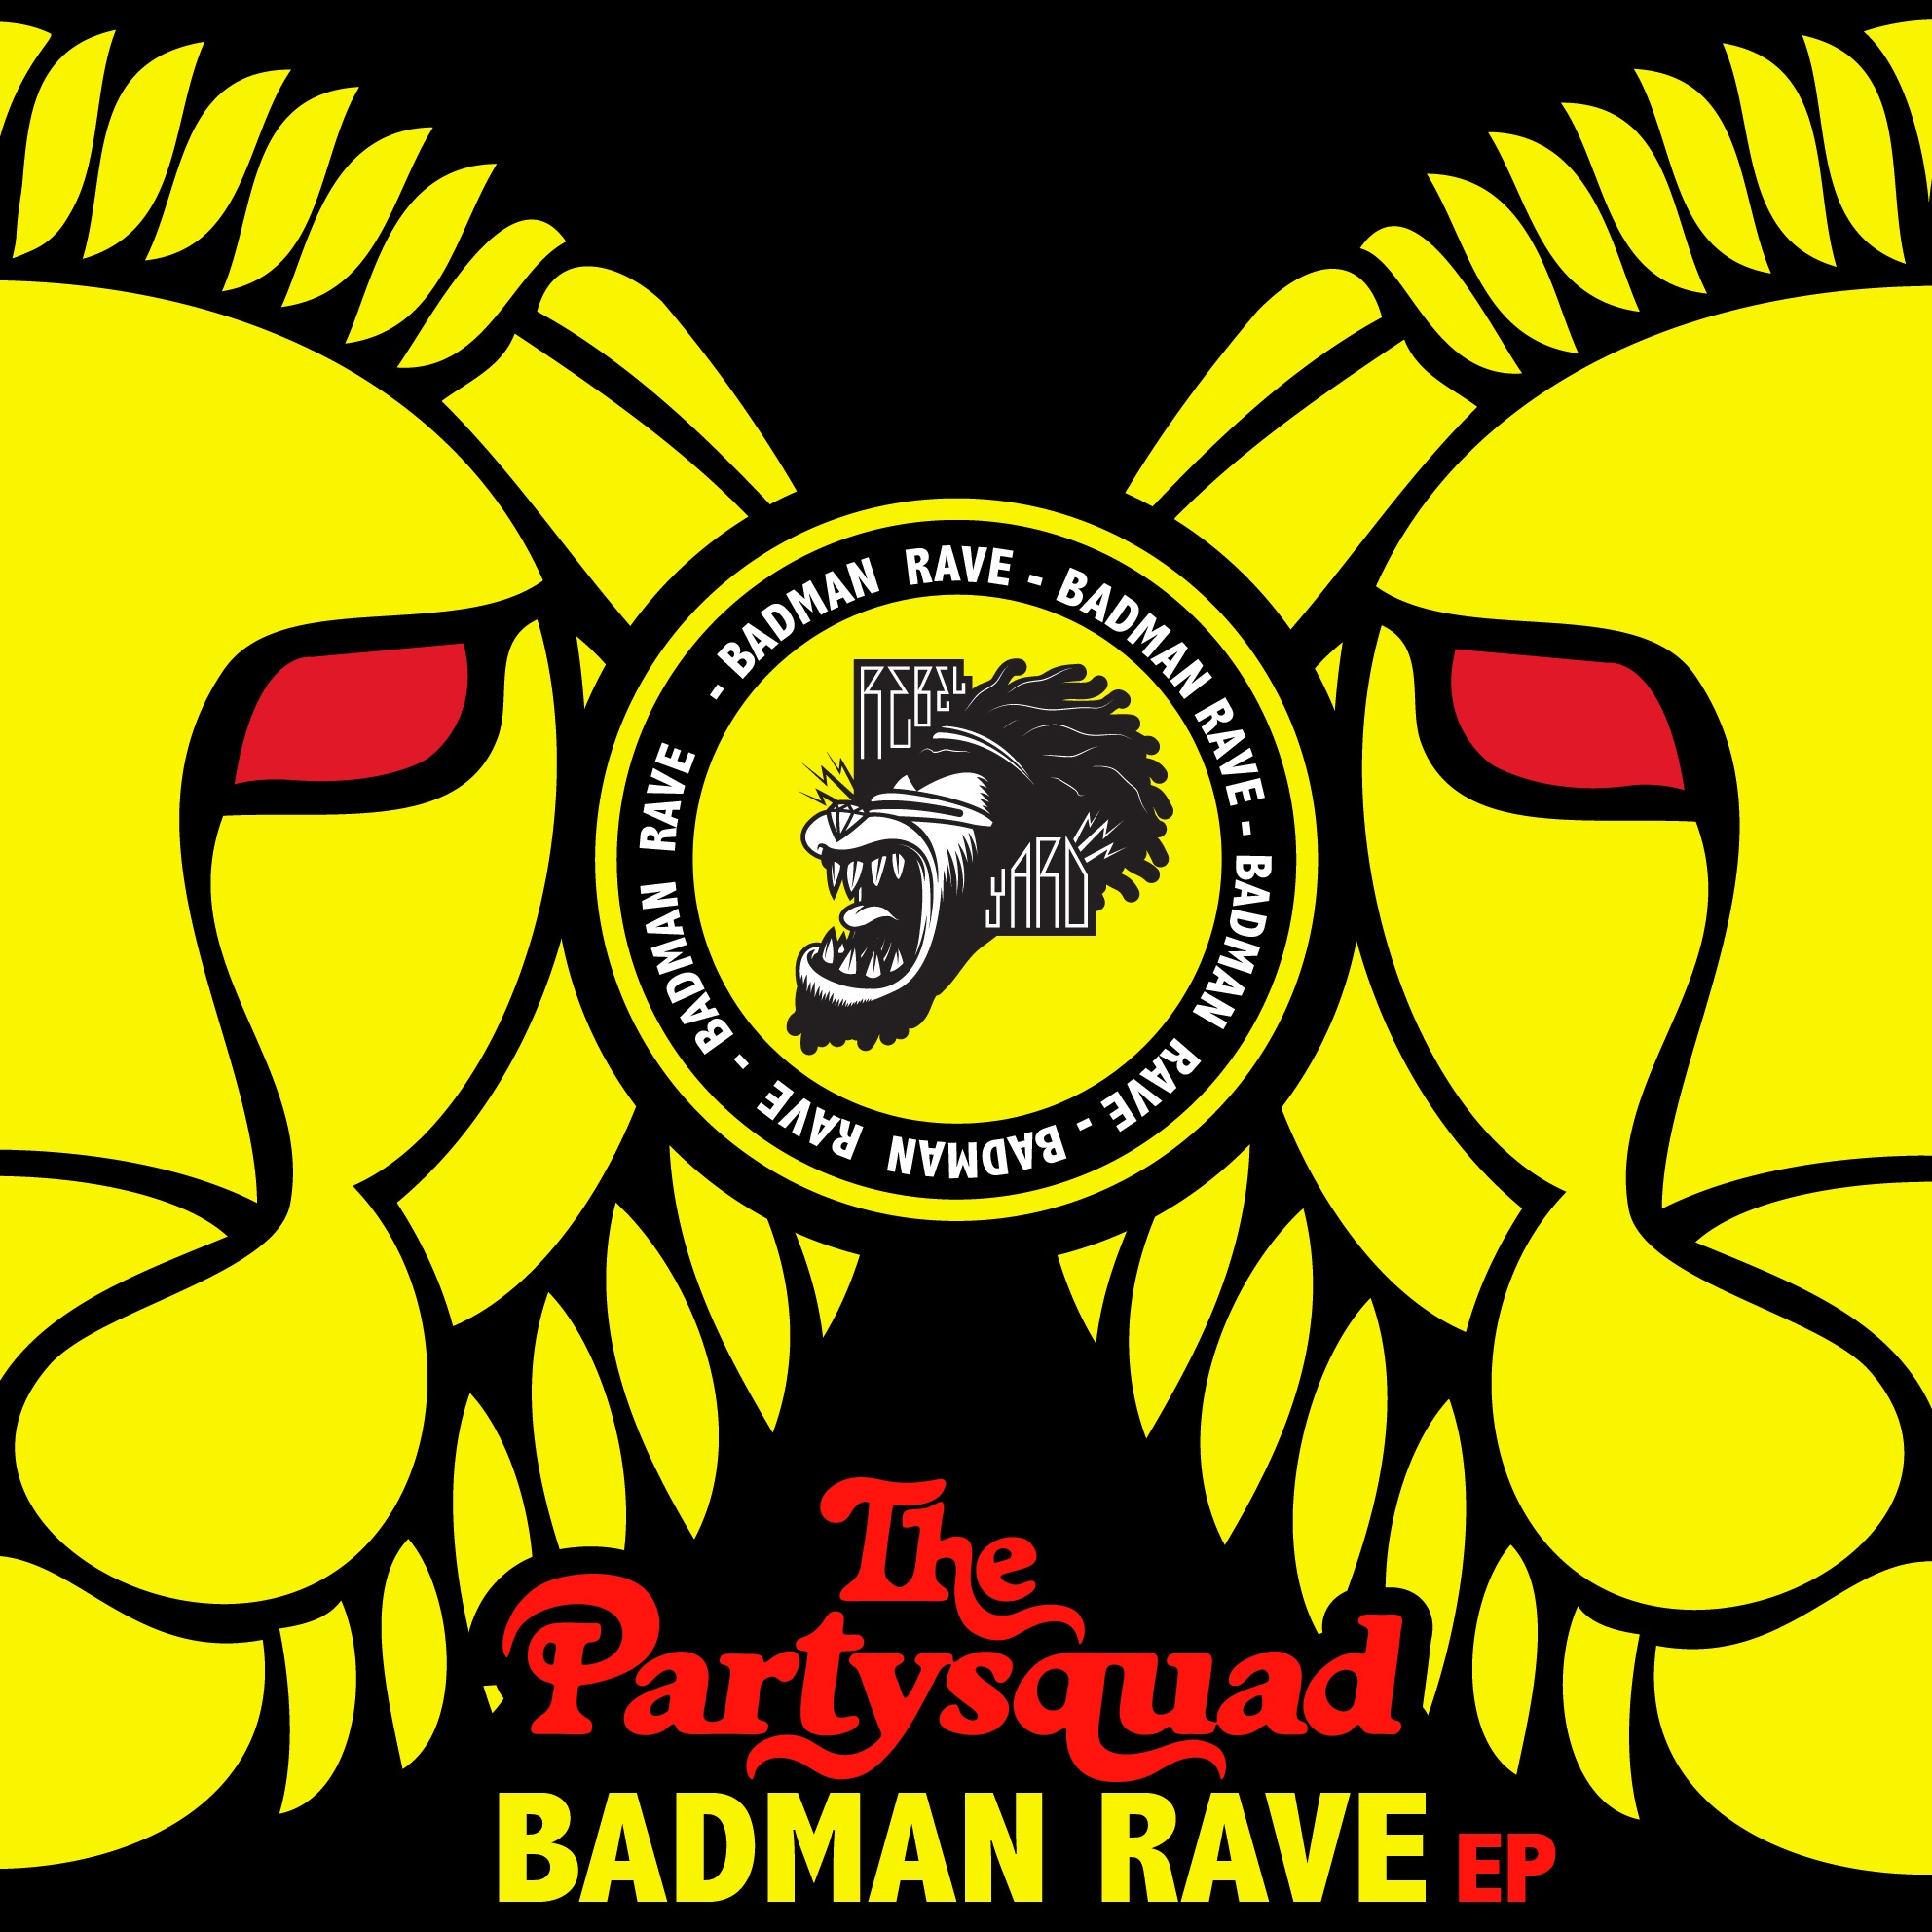 Badman Rave